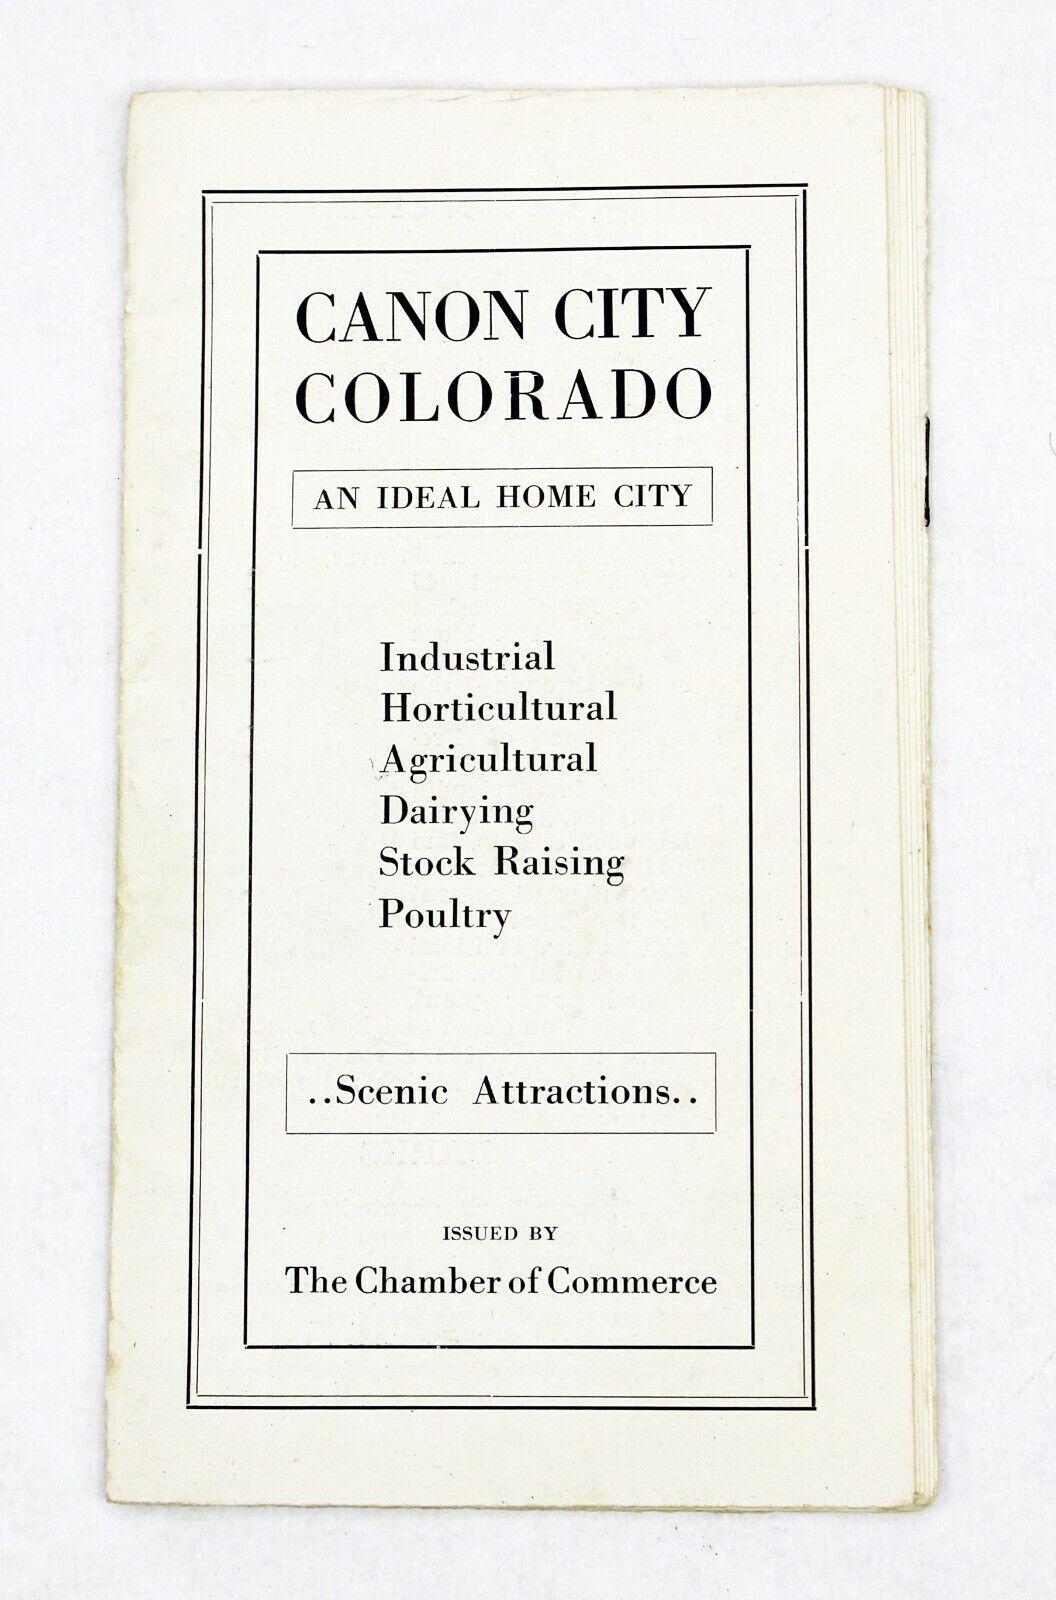 Early Royal Gorge Canon City Colorado Brochure Before Bridge 1922 Skyline Drive+